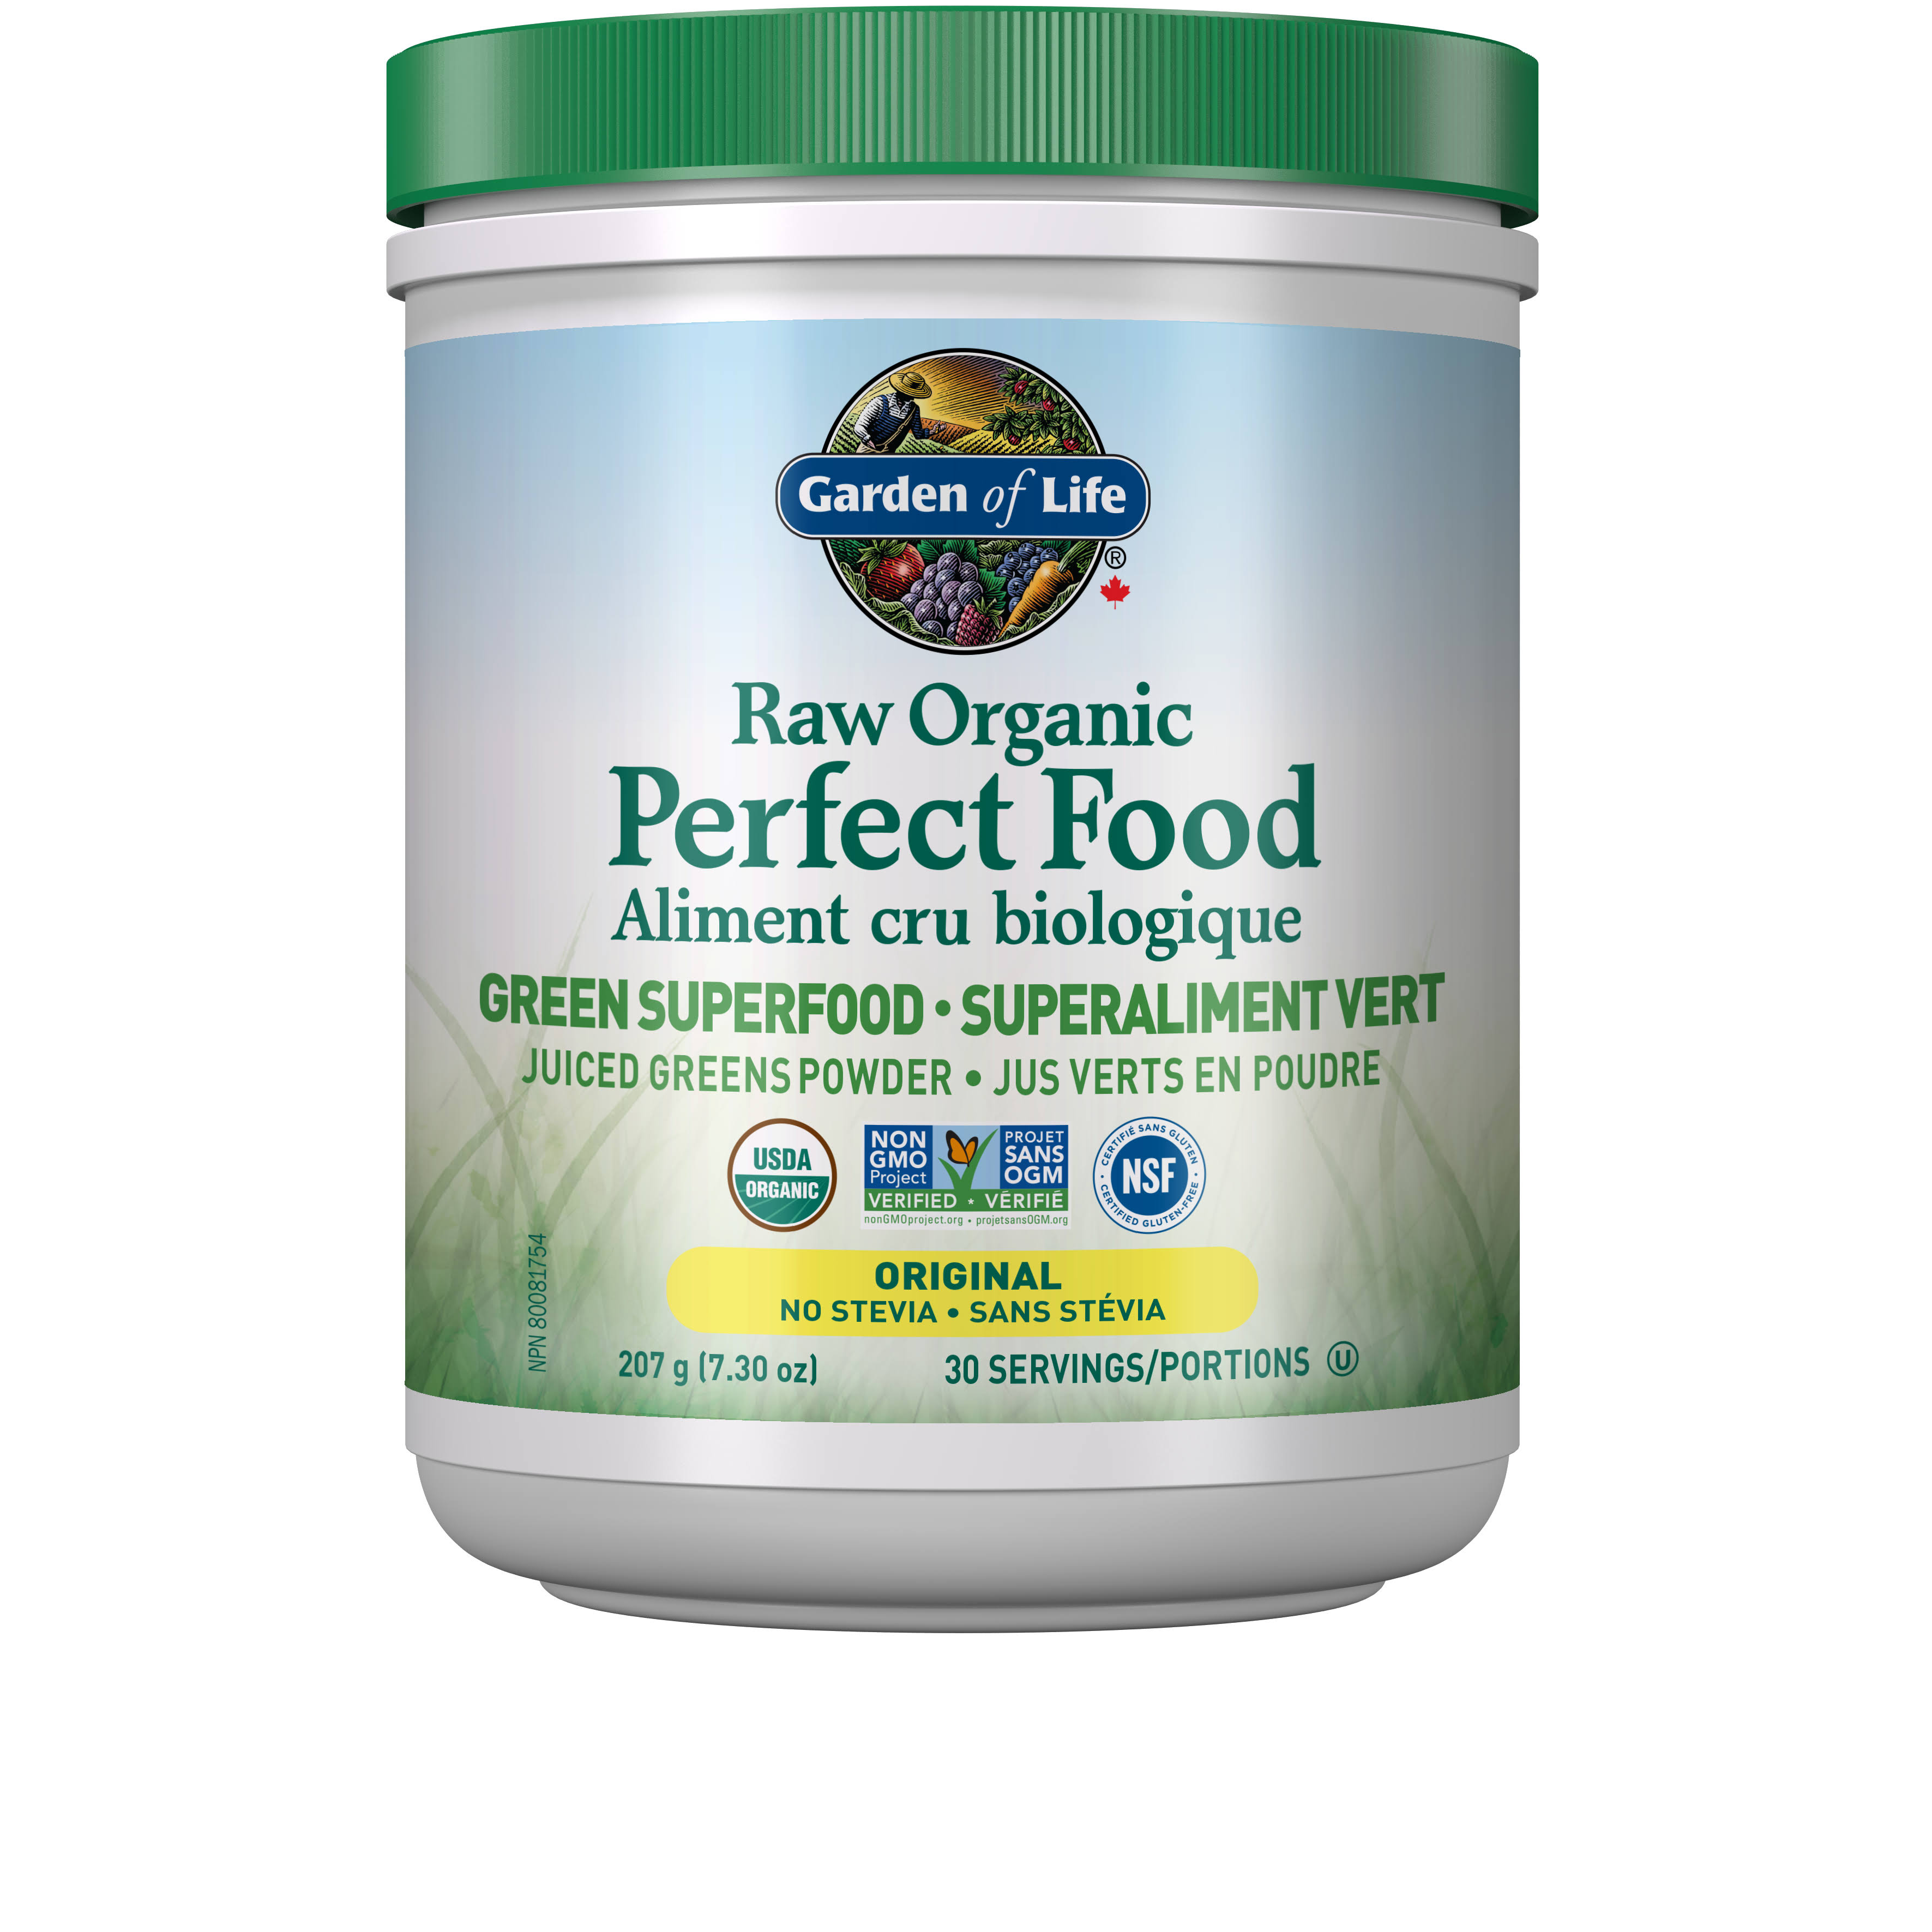 Garden of Life Raw Organic Perfect Food Original 207g